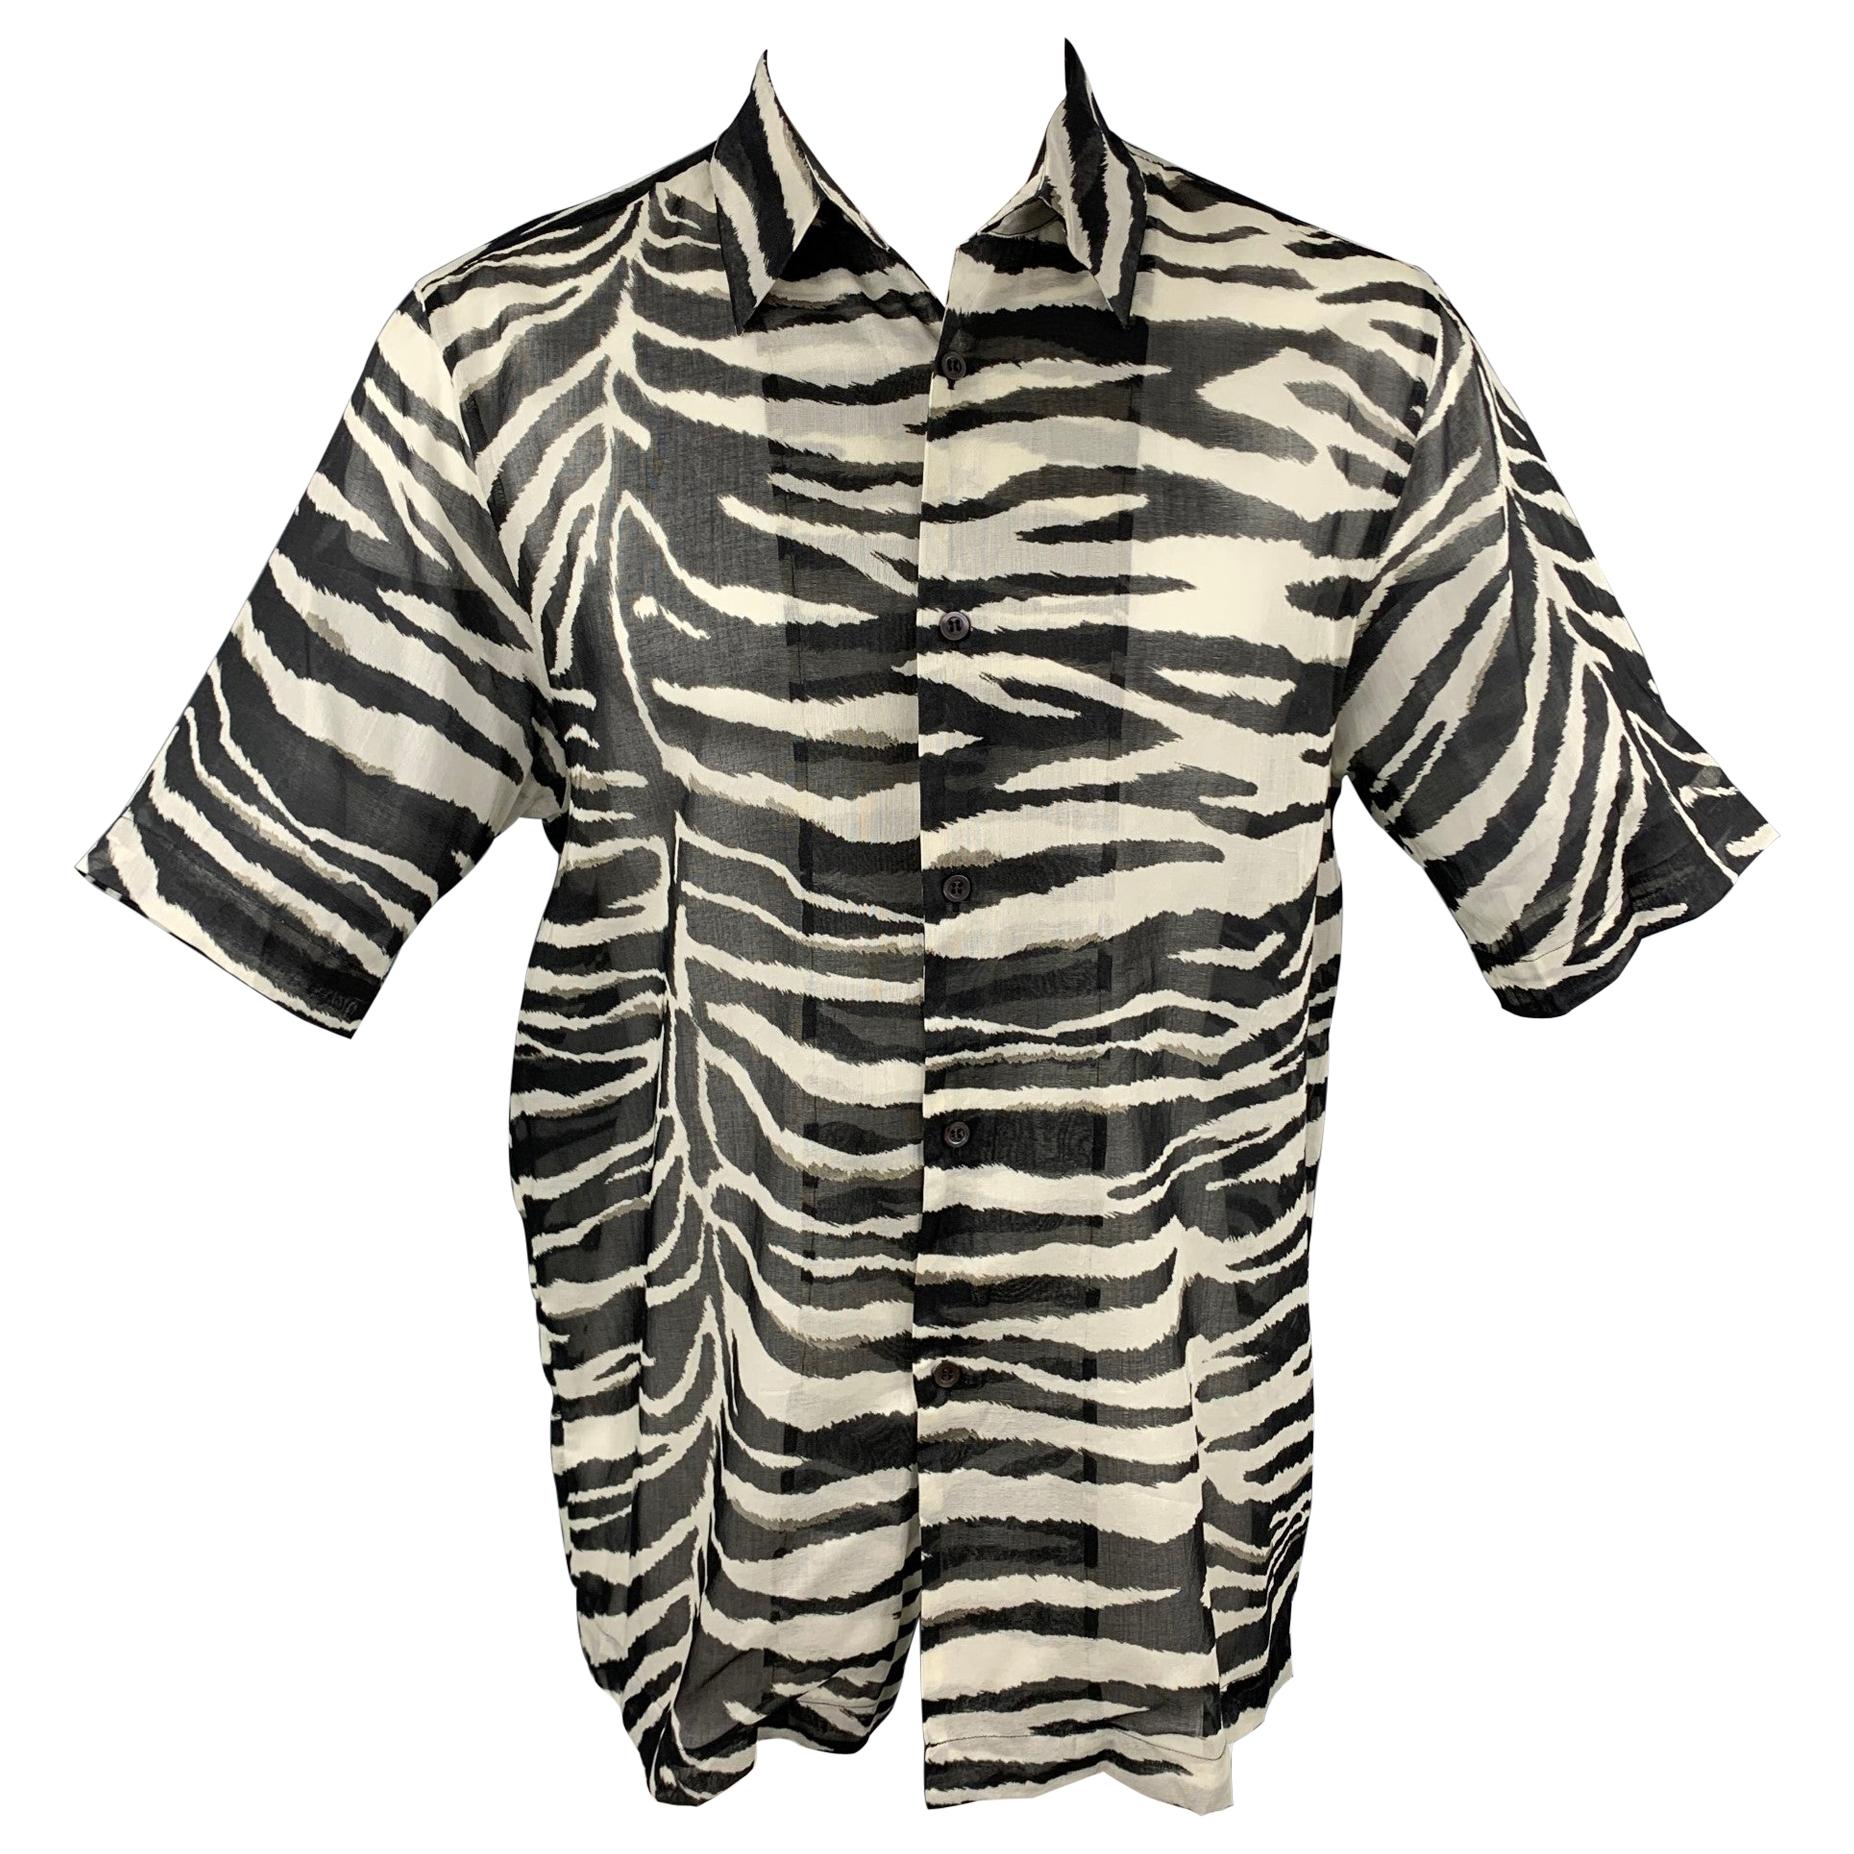 DRIES VAN NOTEN S/S 20 Size XXS Black & White Zebra Print Cotton Camp Shirt